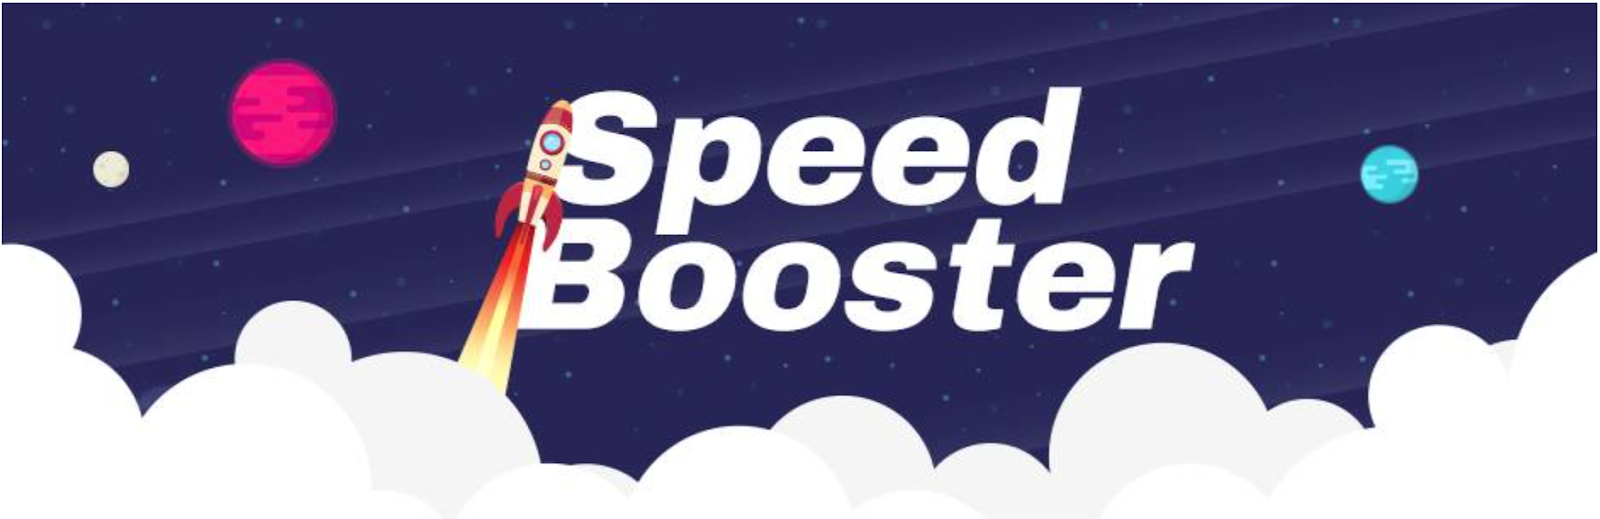 plugins to speed up wordpress: speed booster pack